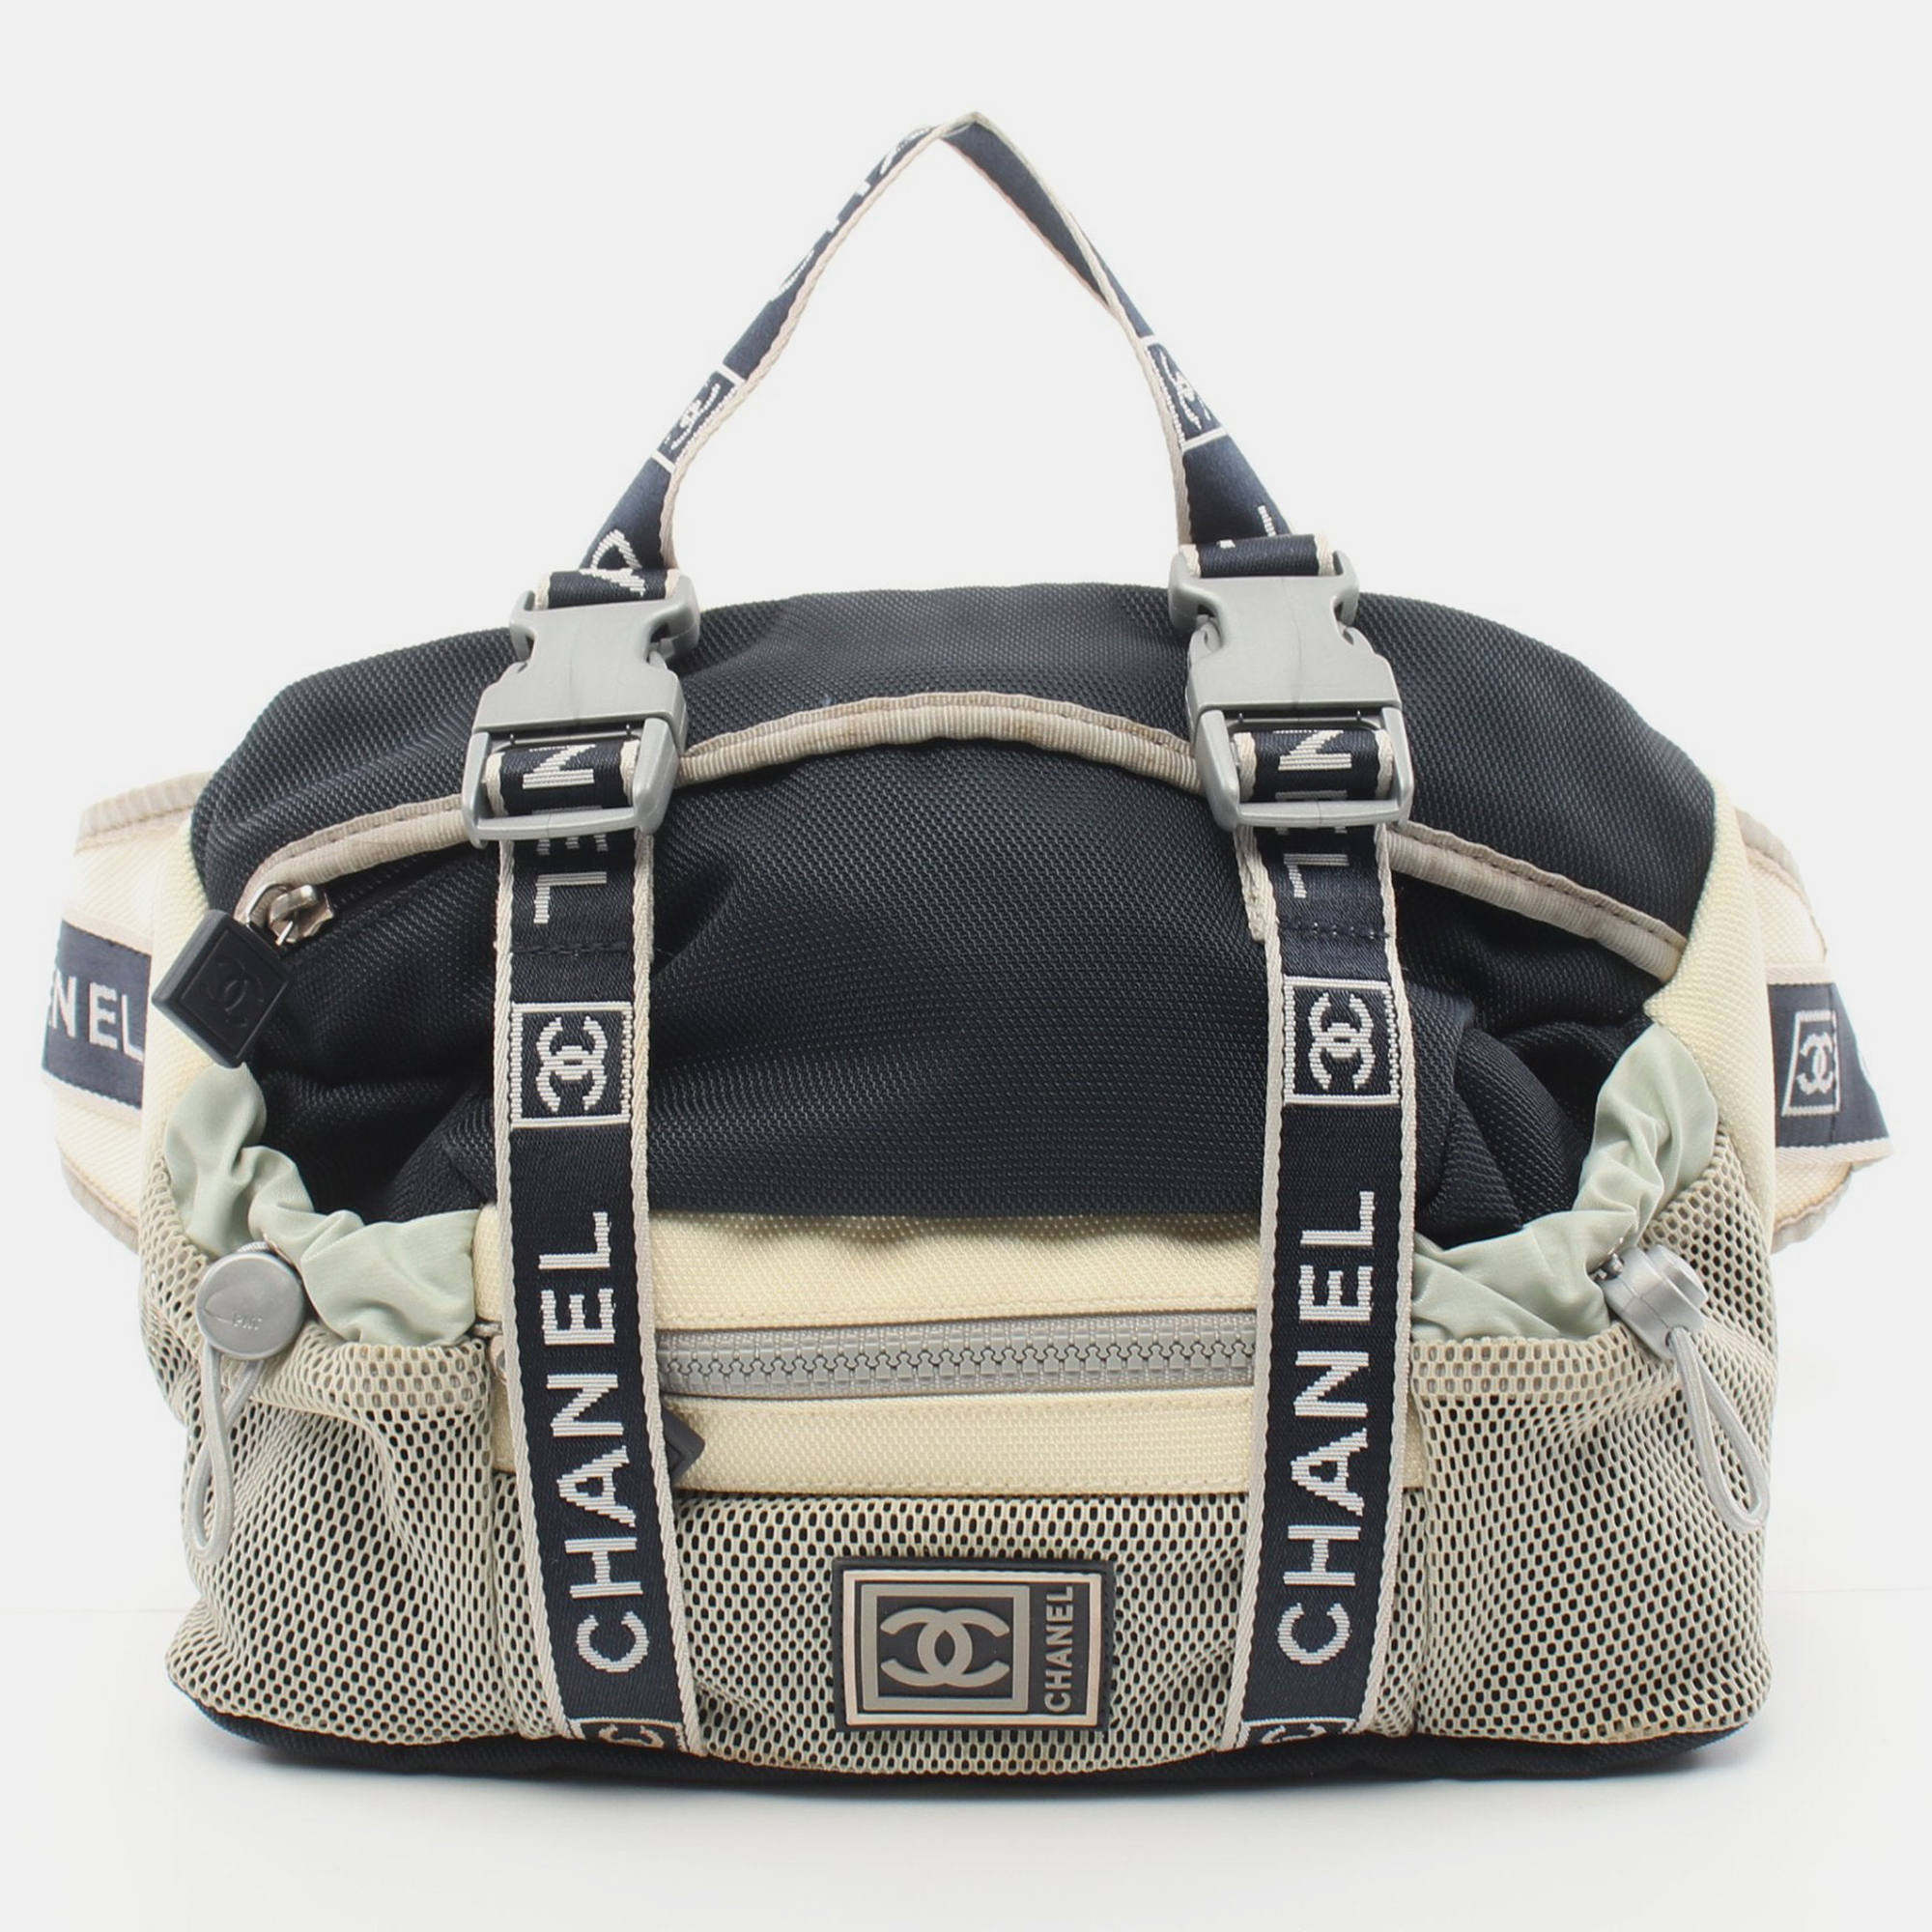 Chanel sports line waist bag body bag nylon off white navy multicolor